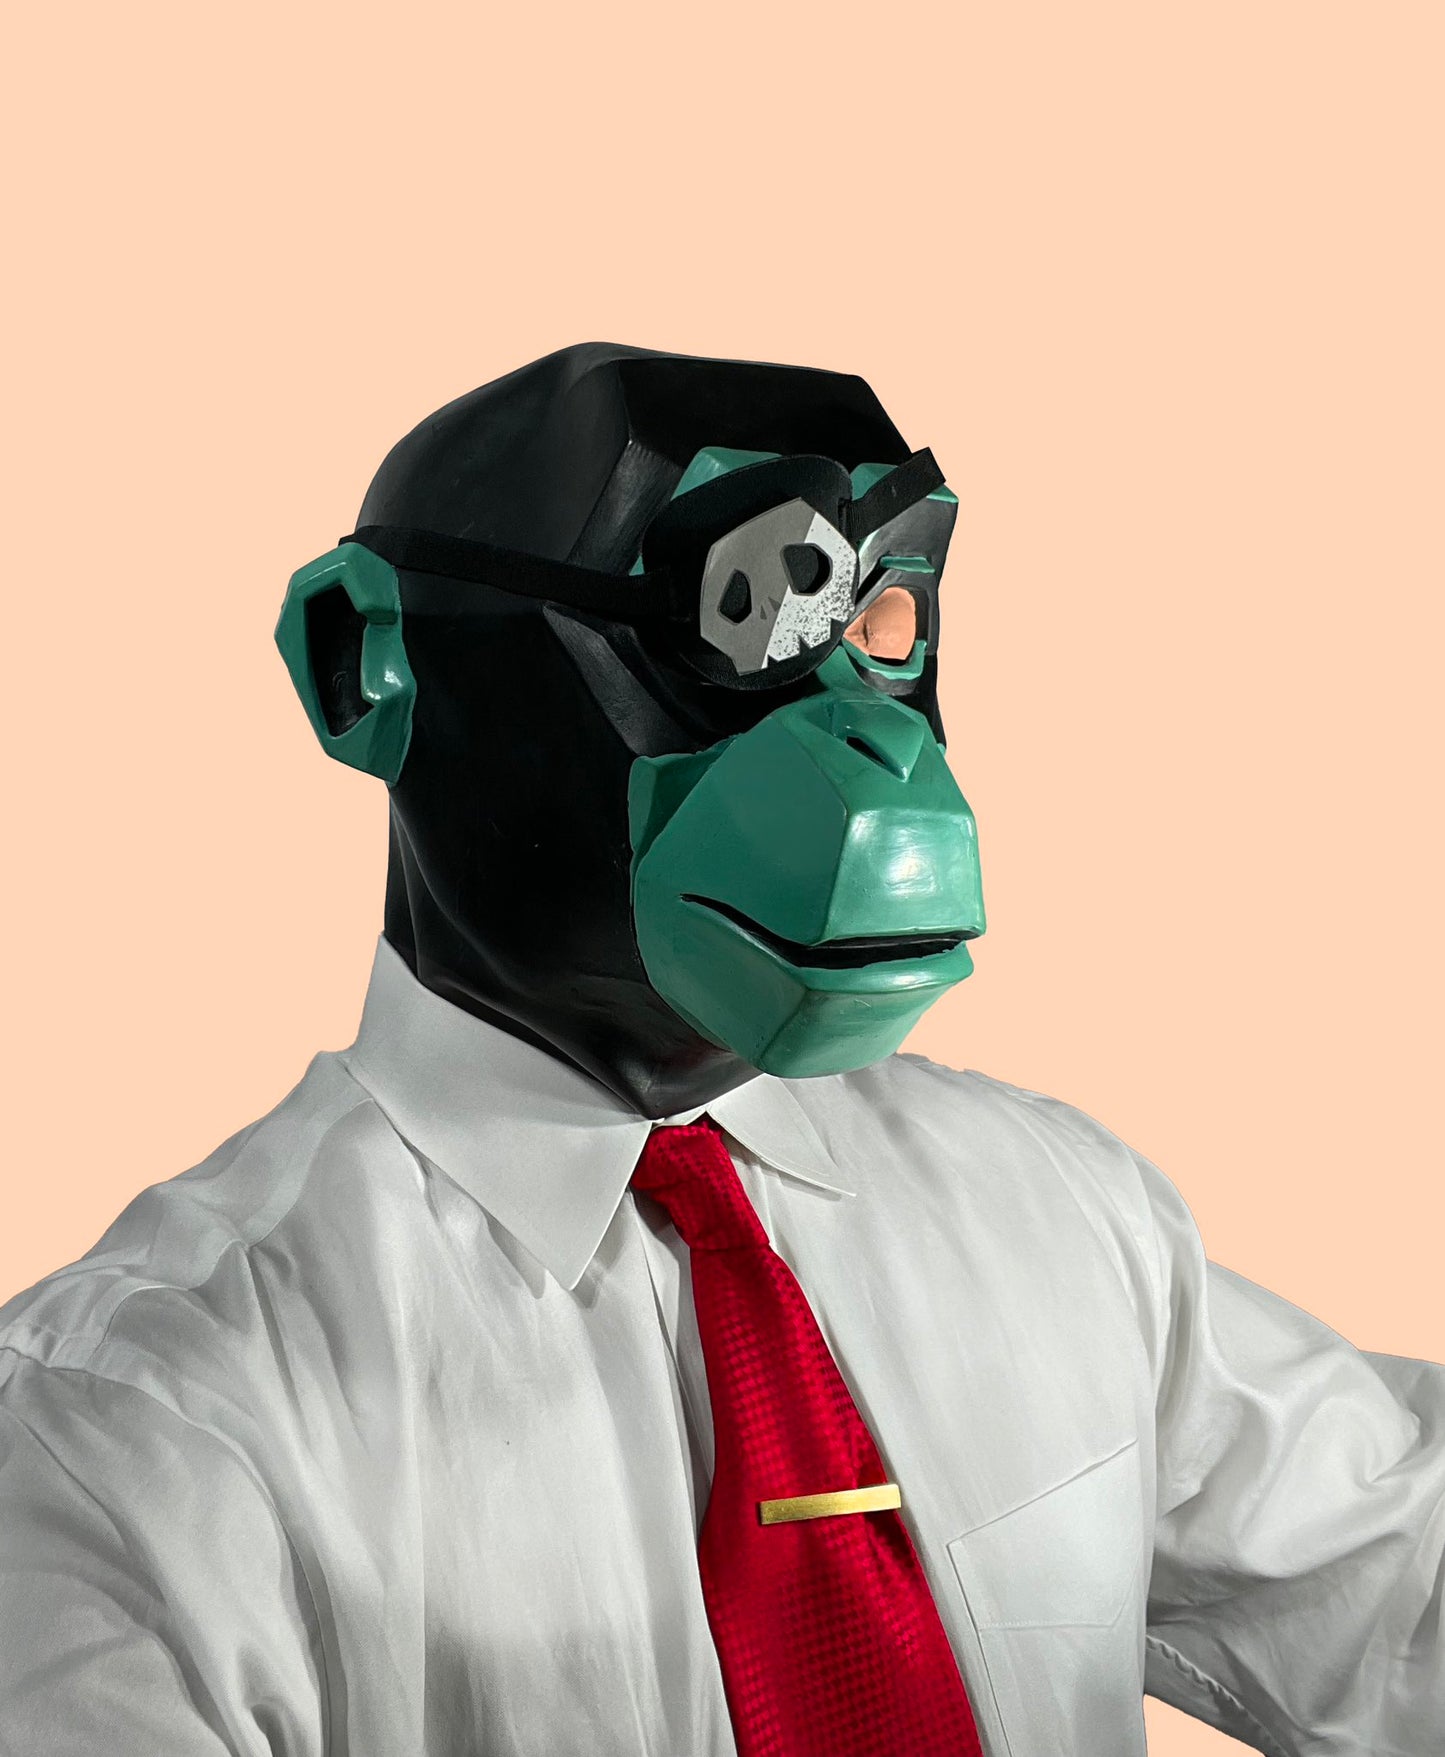 Primates NFT Latex Mask